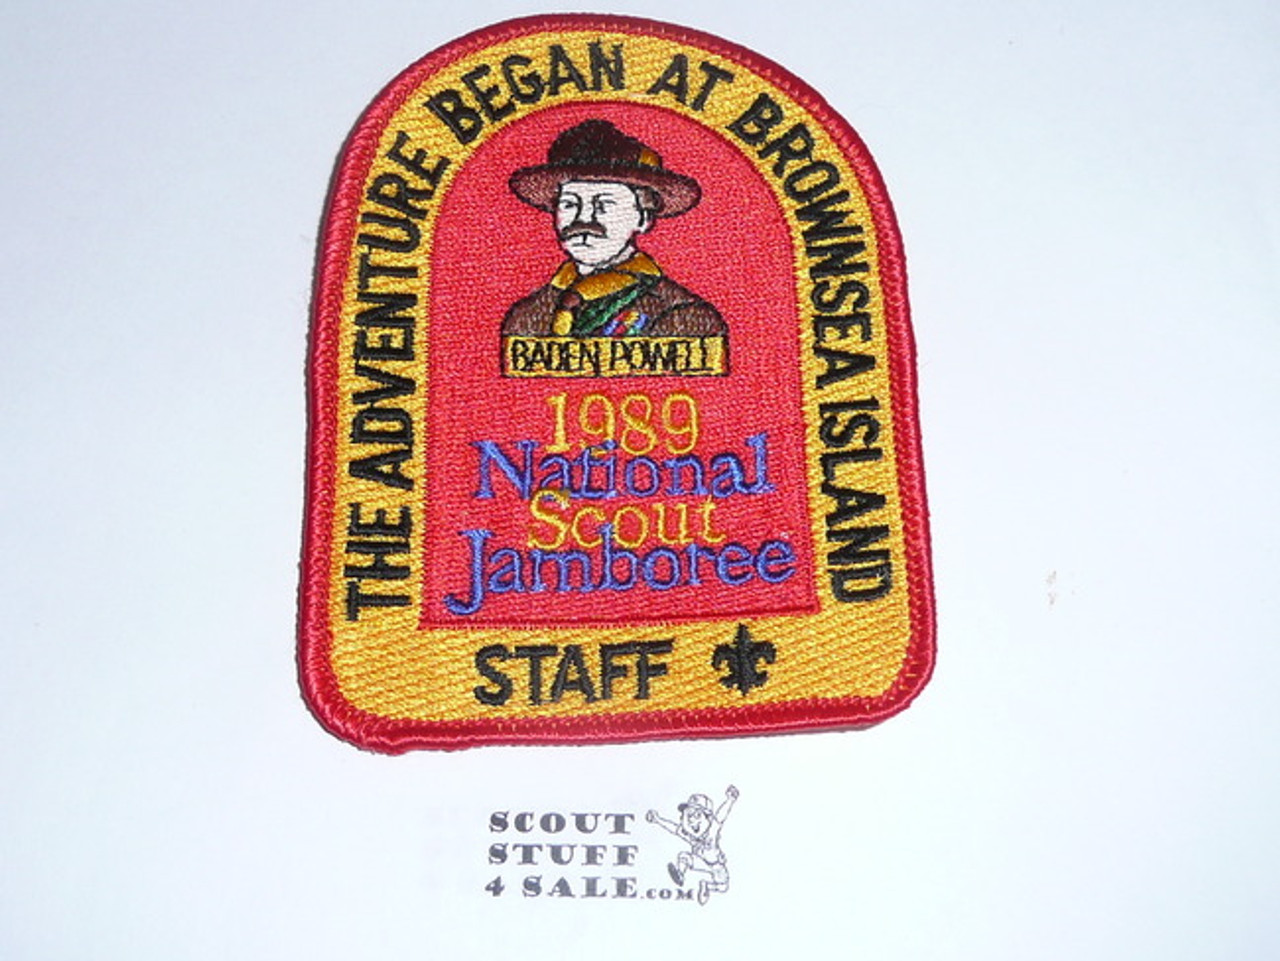 1989 National Jamboree Brownsea Island Staff Patch